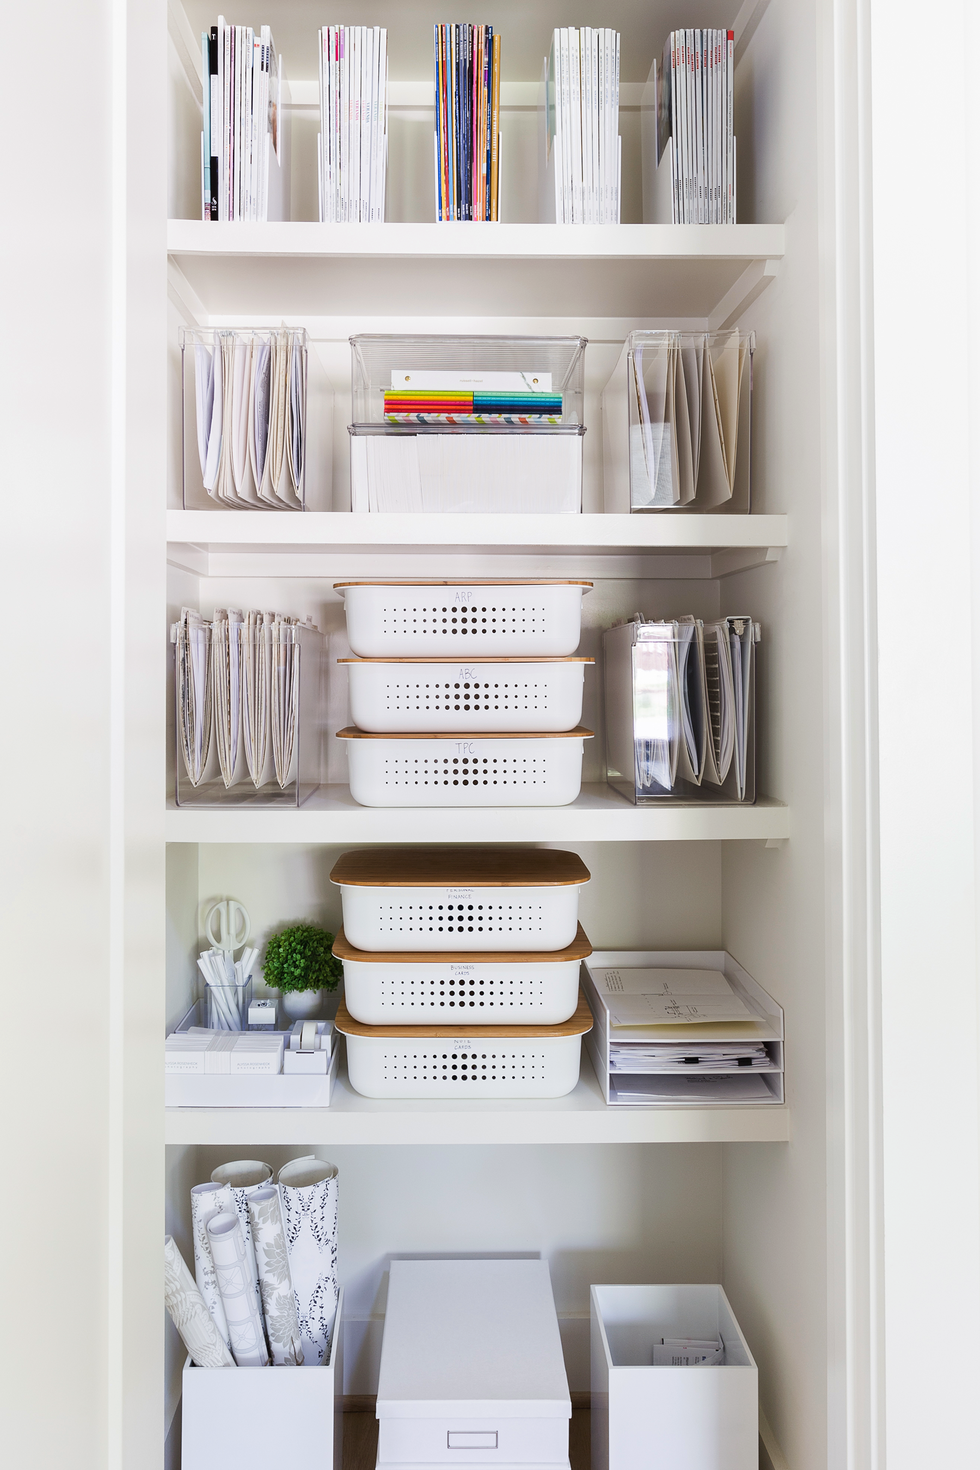 Office organization ideas and minimalist checklist – House Mix